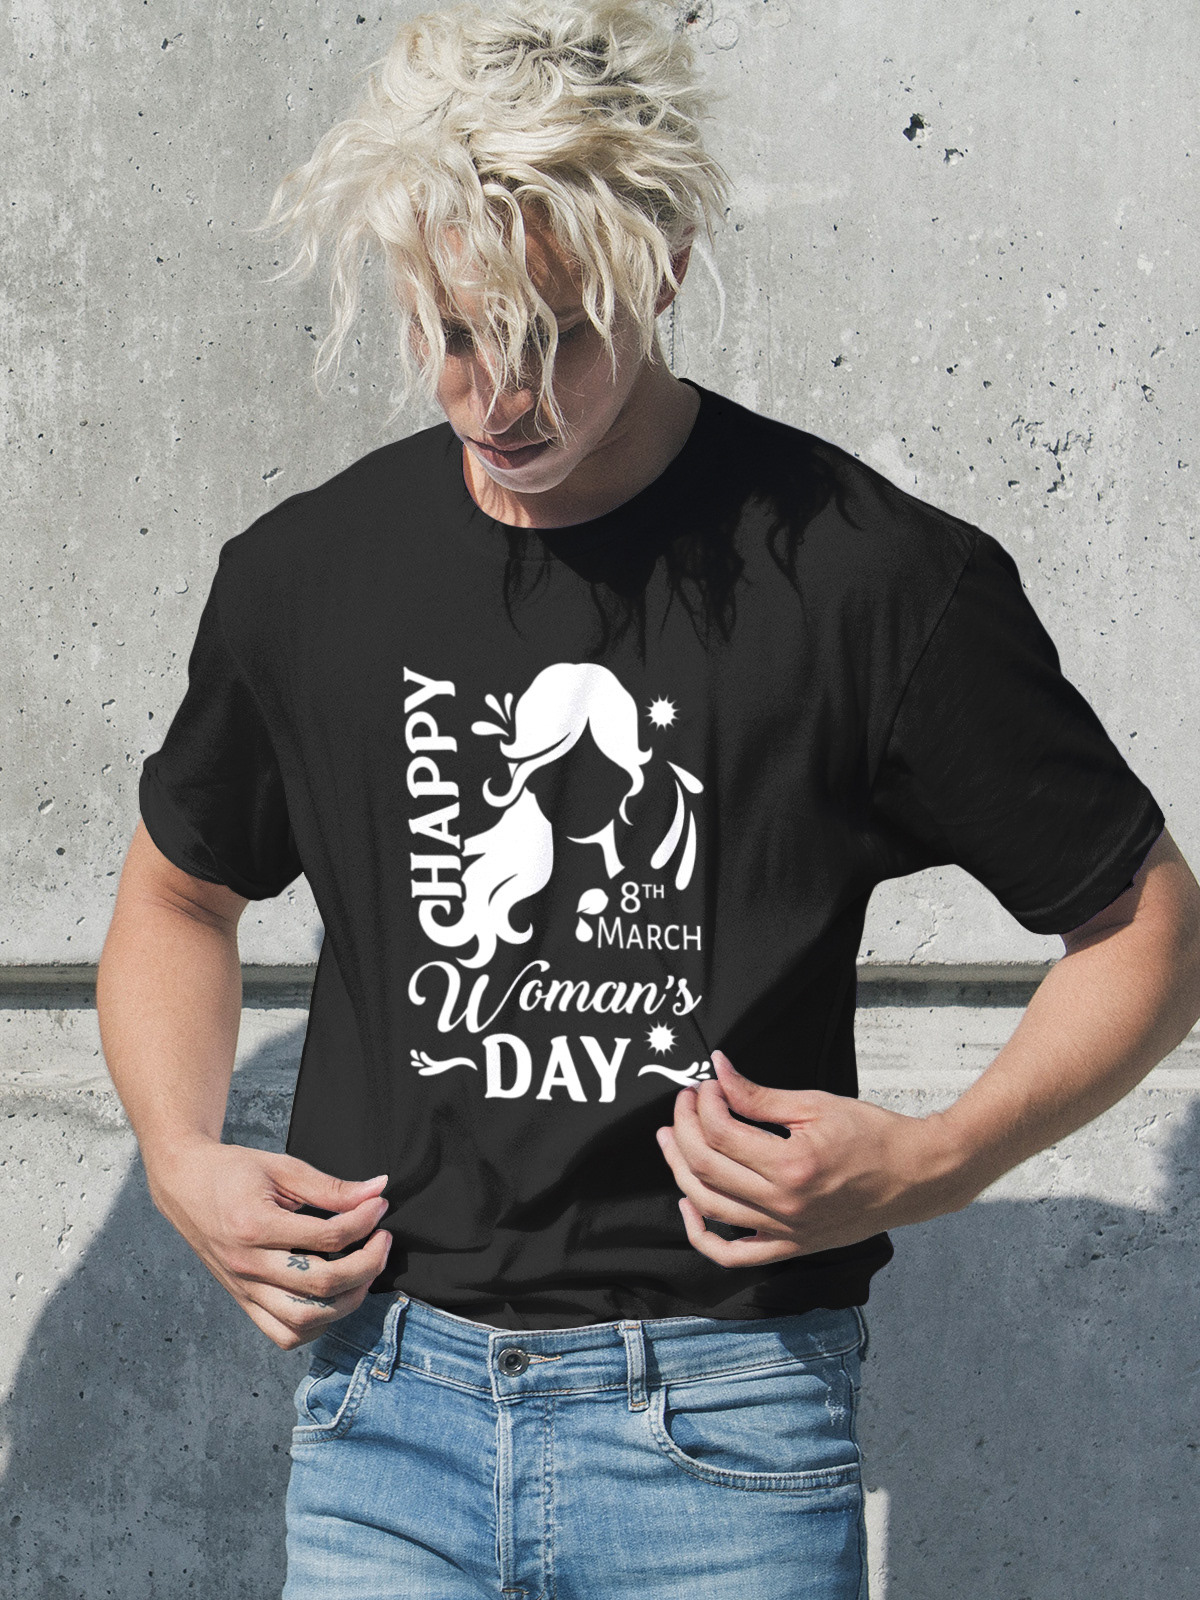 8 March International Day T-Shirts